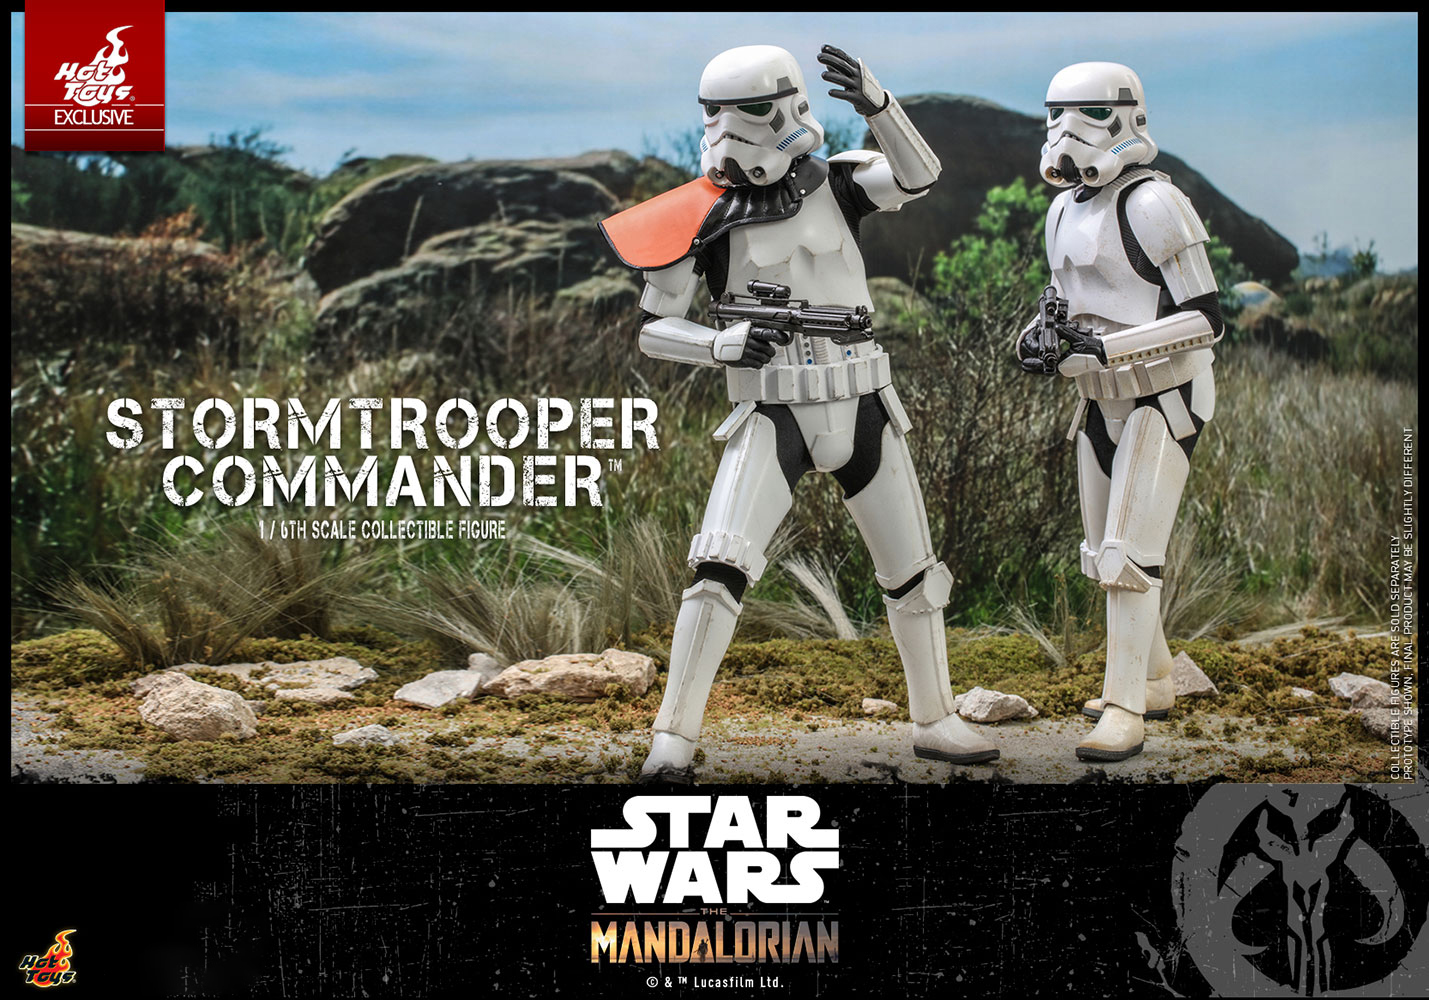 Star Wars: The Mandalorian - Stormtrooper Commander